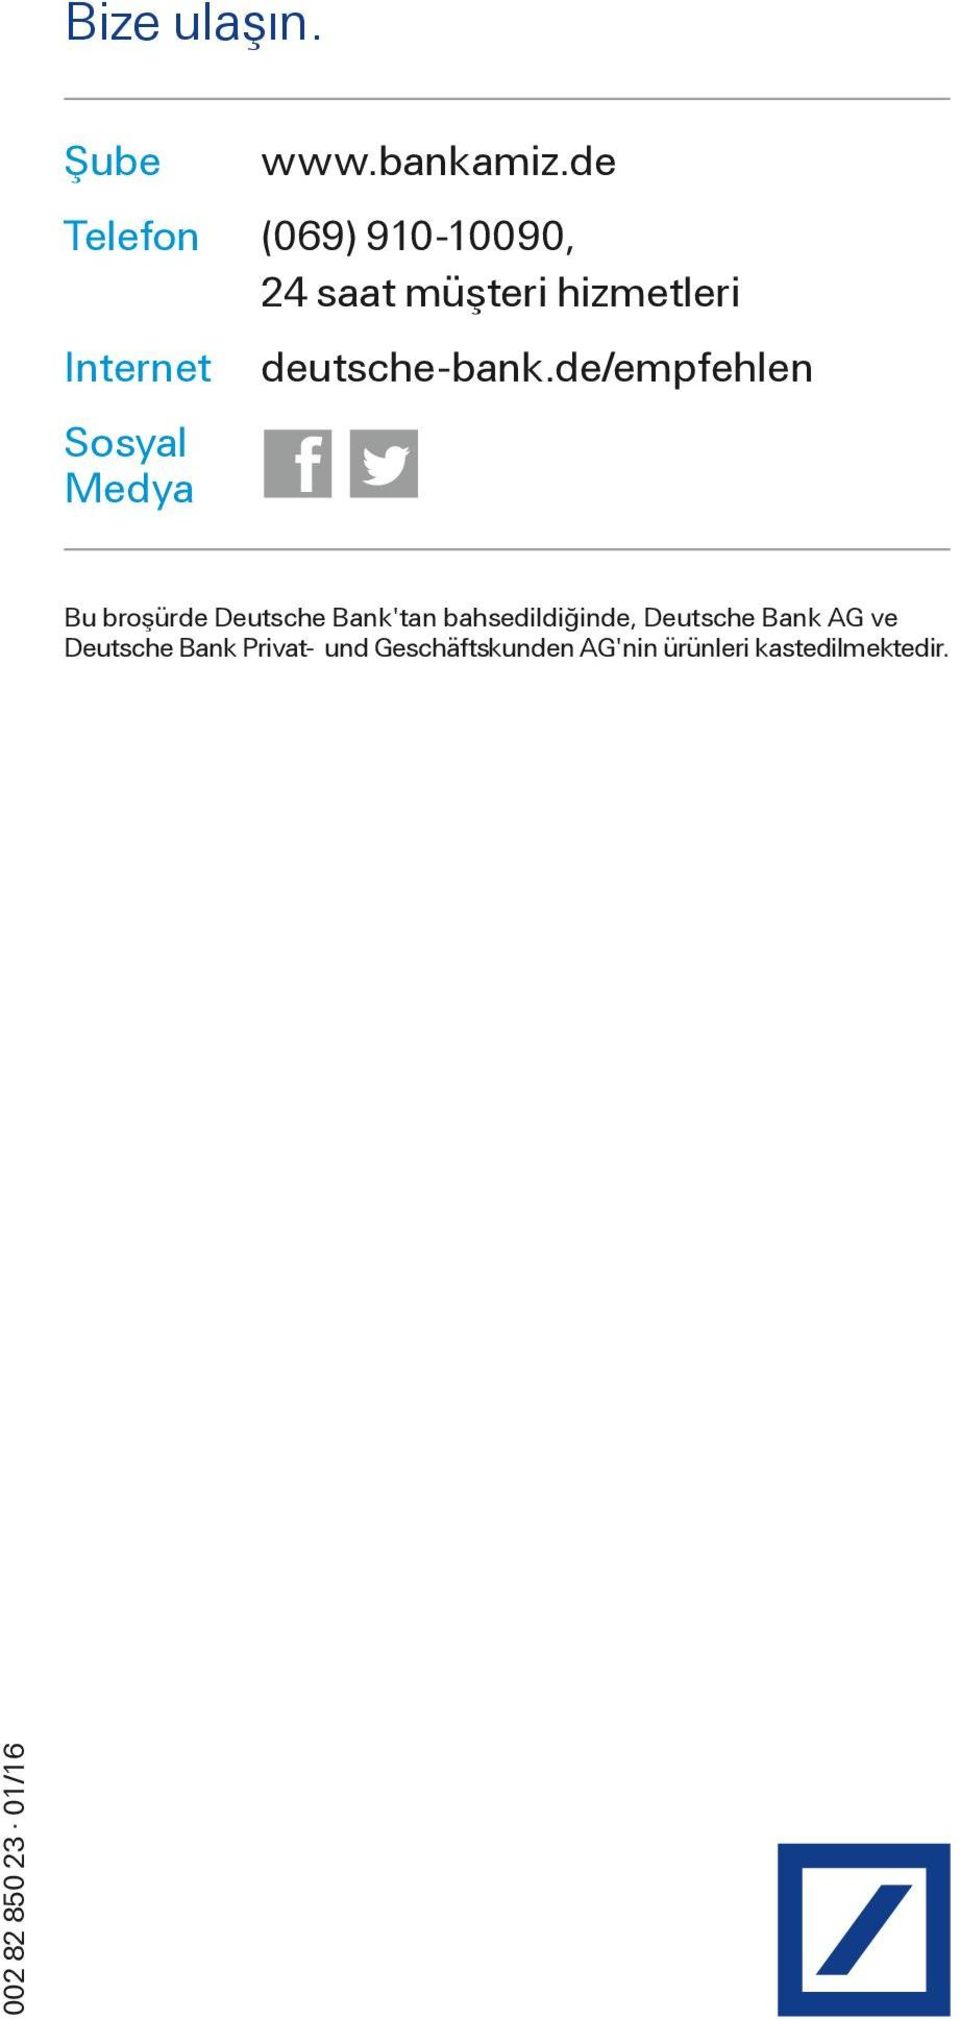 deutsche-bank.